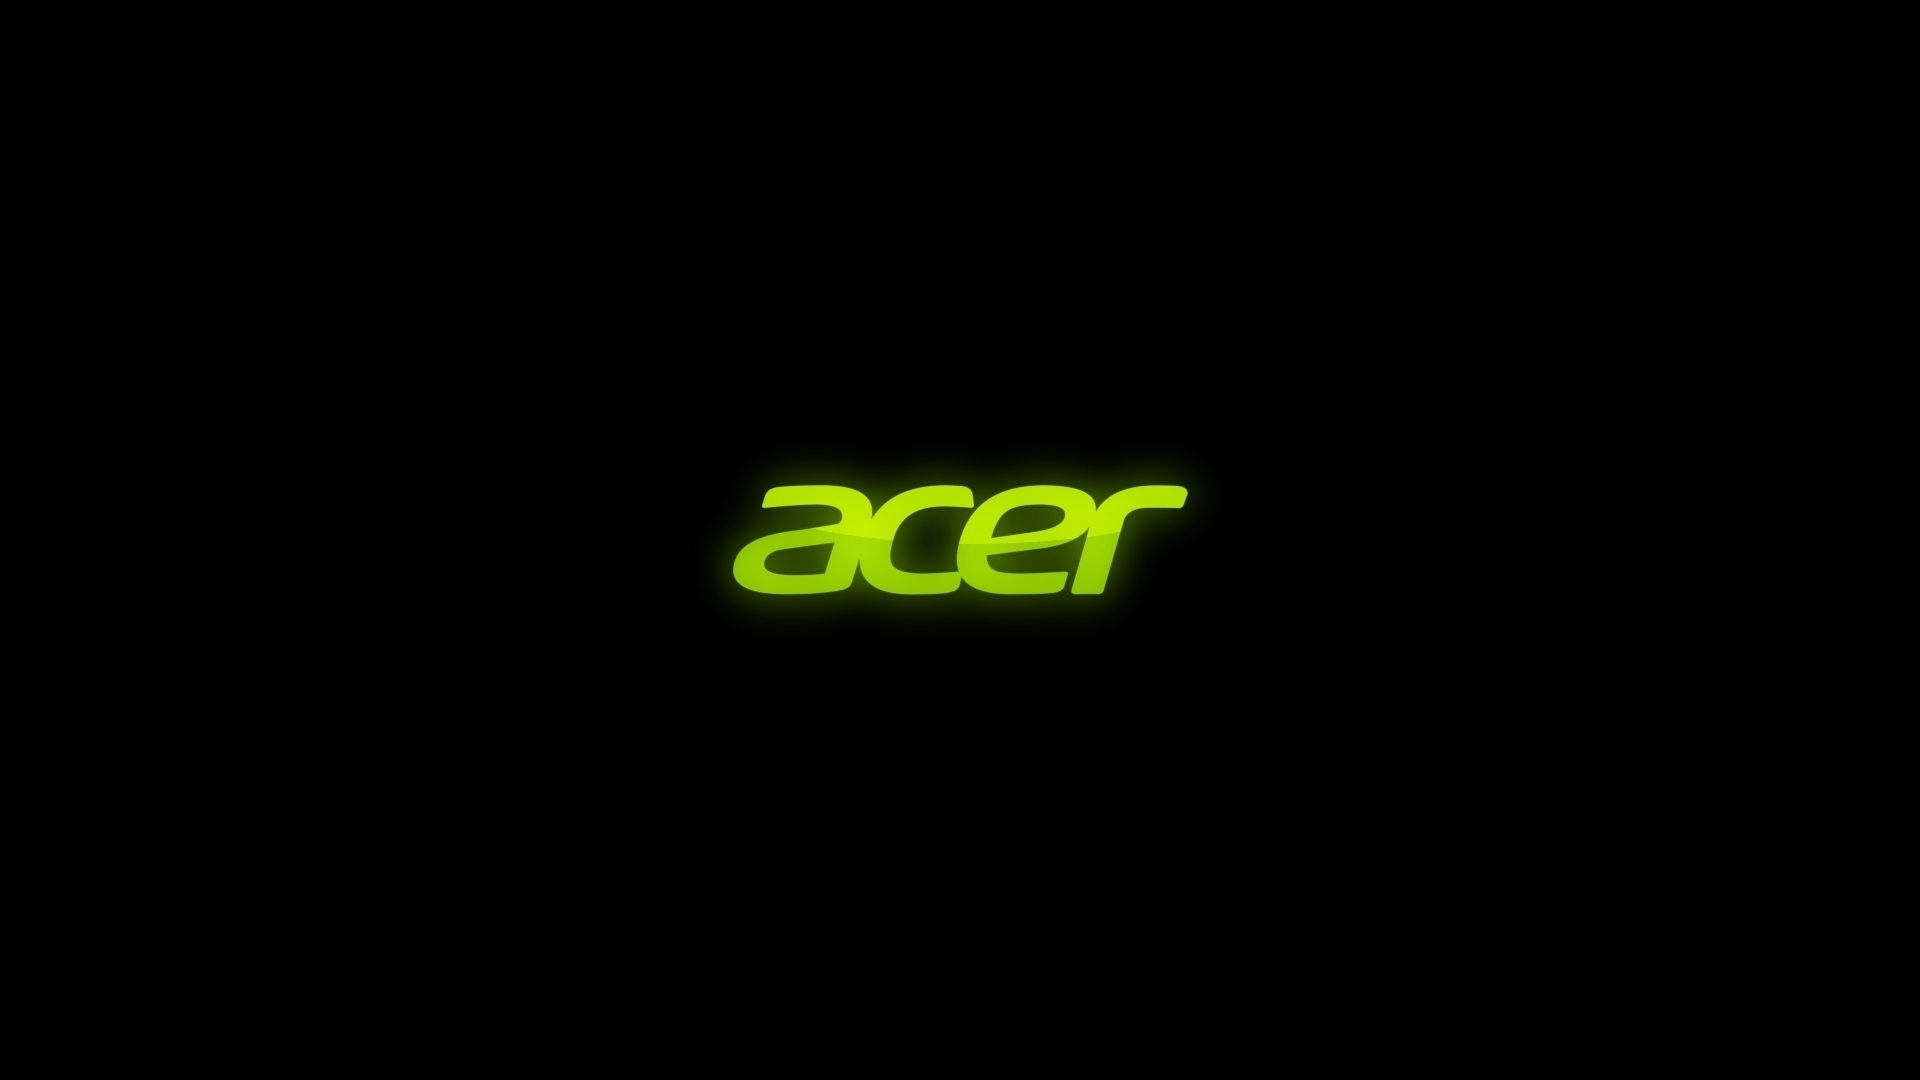 Acer On Black Wallpaper Stock Photos